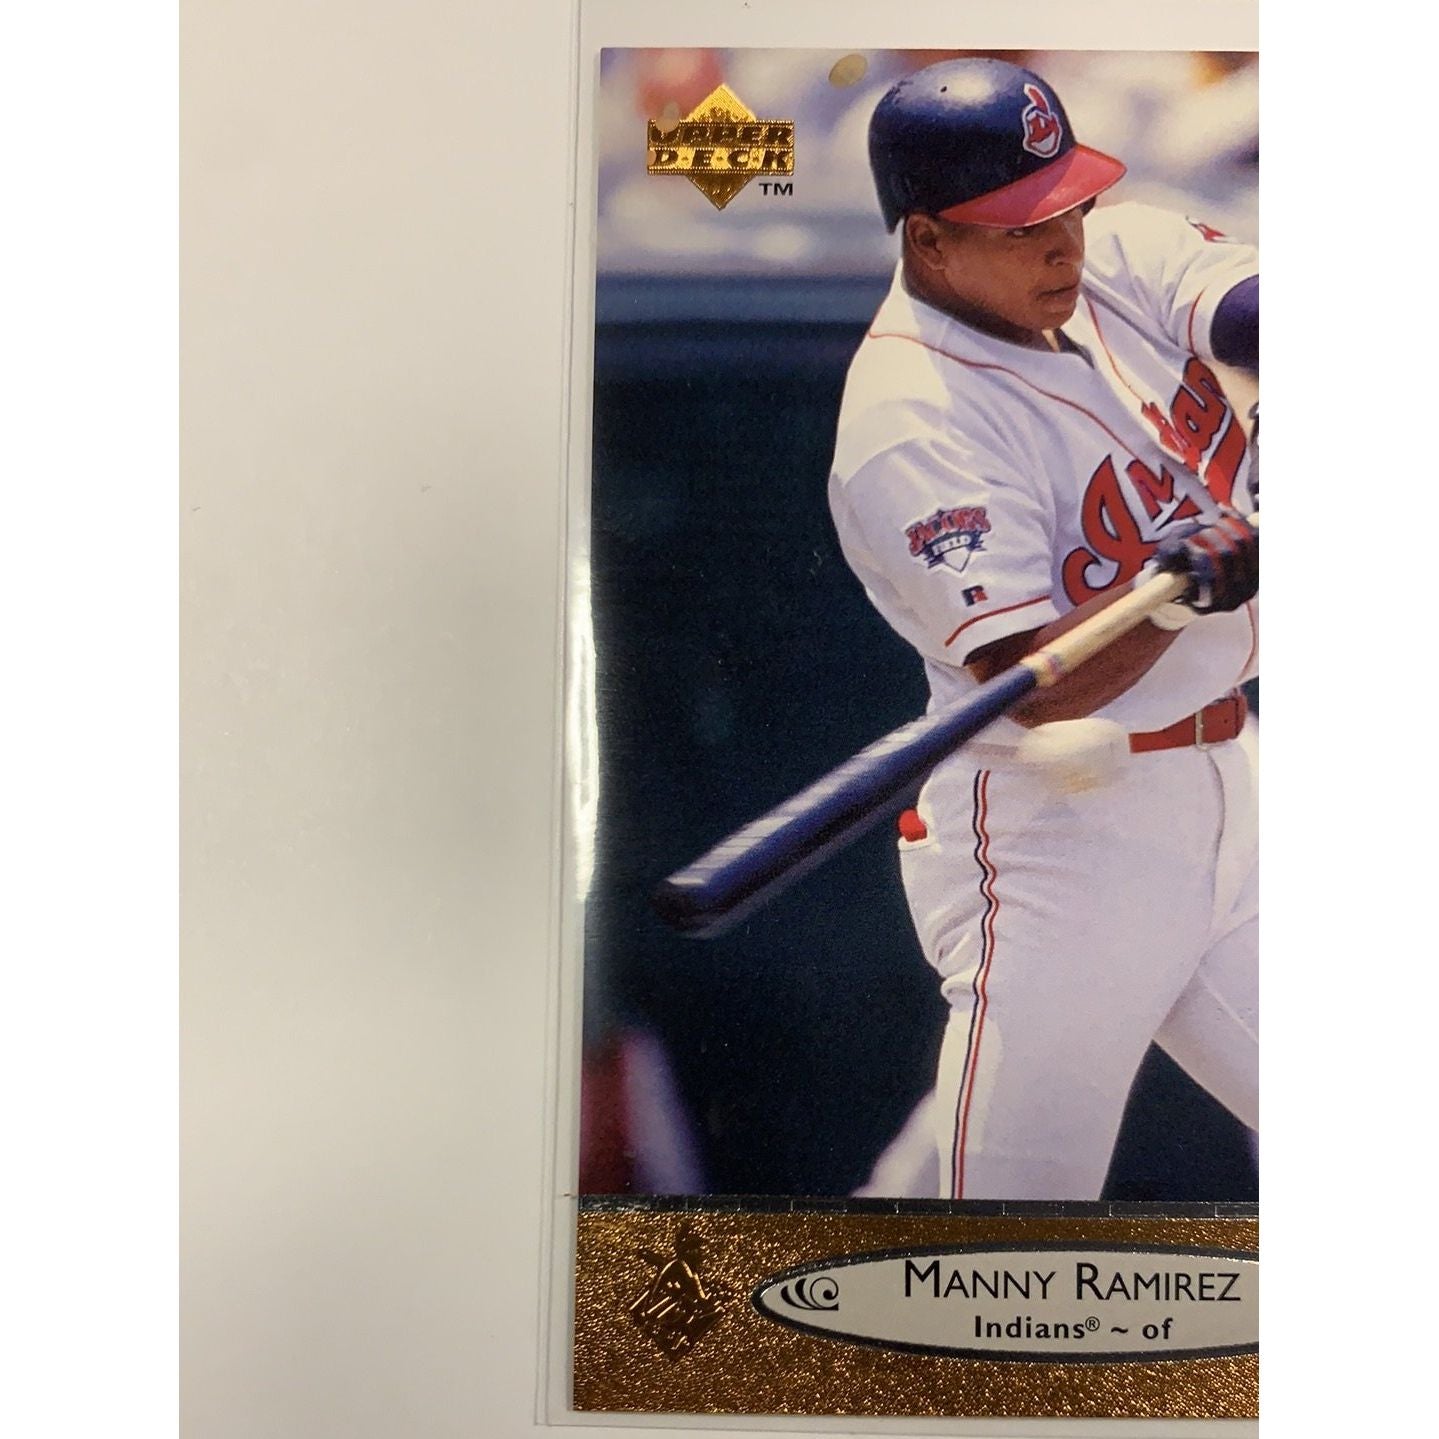  1996 Upper Deck Manny Ramirez Base #55  Local Legends Cards & Collectibles